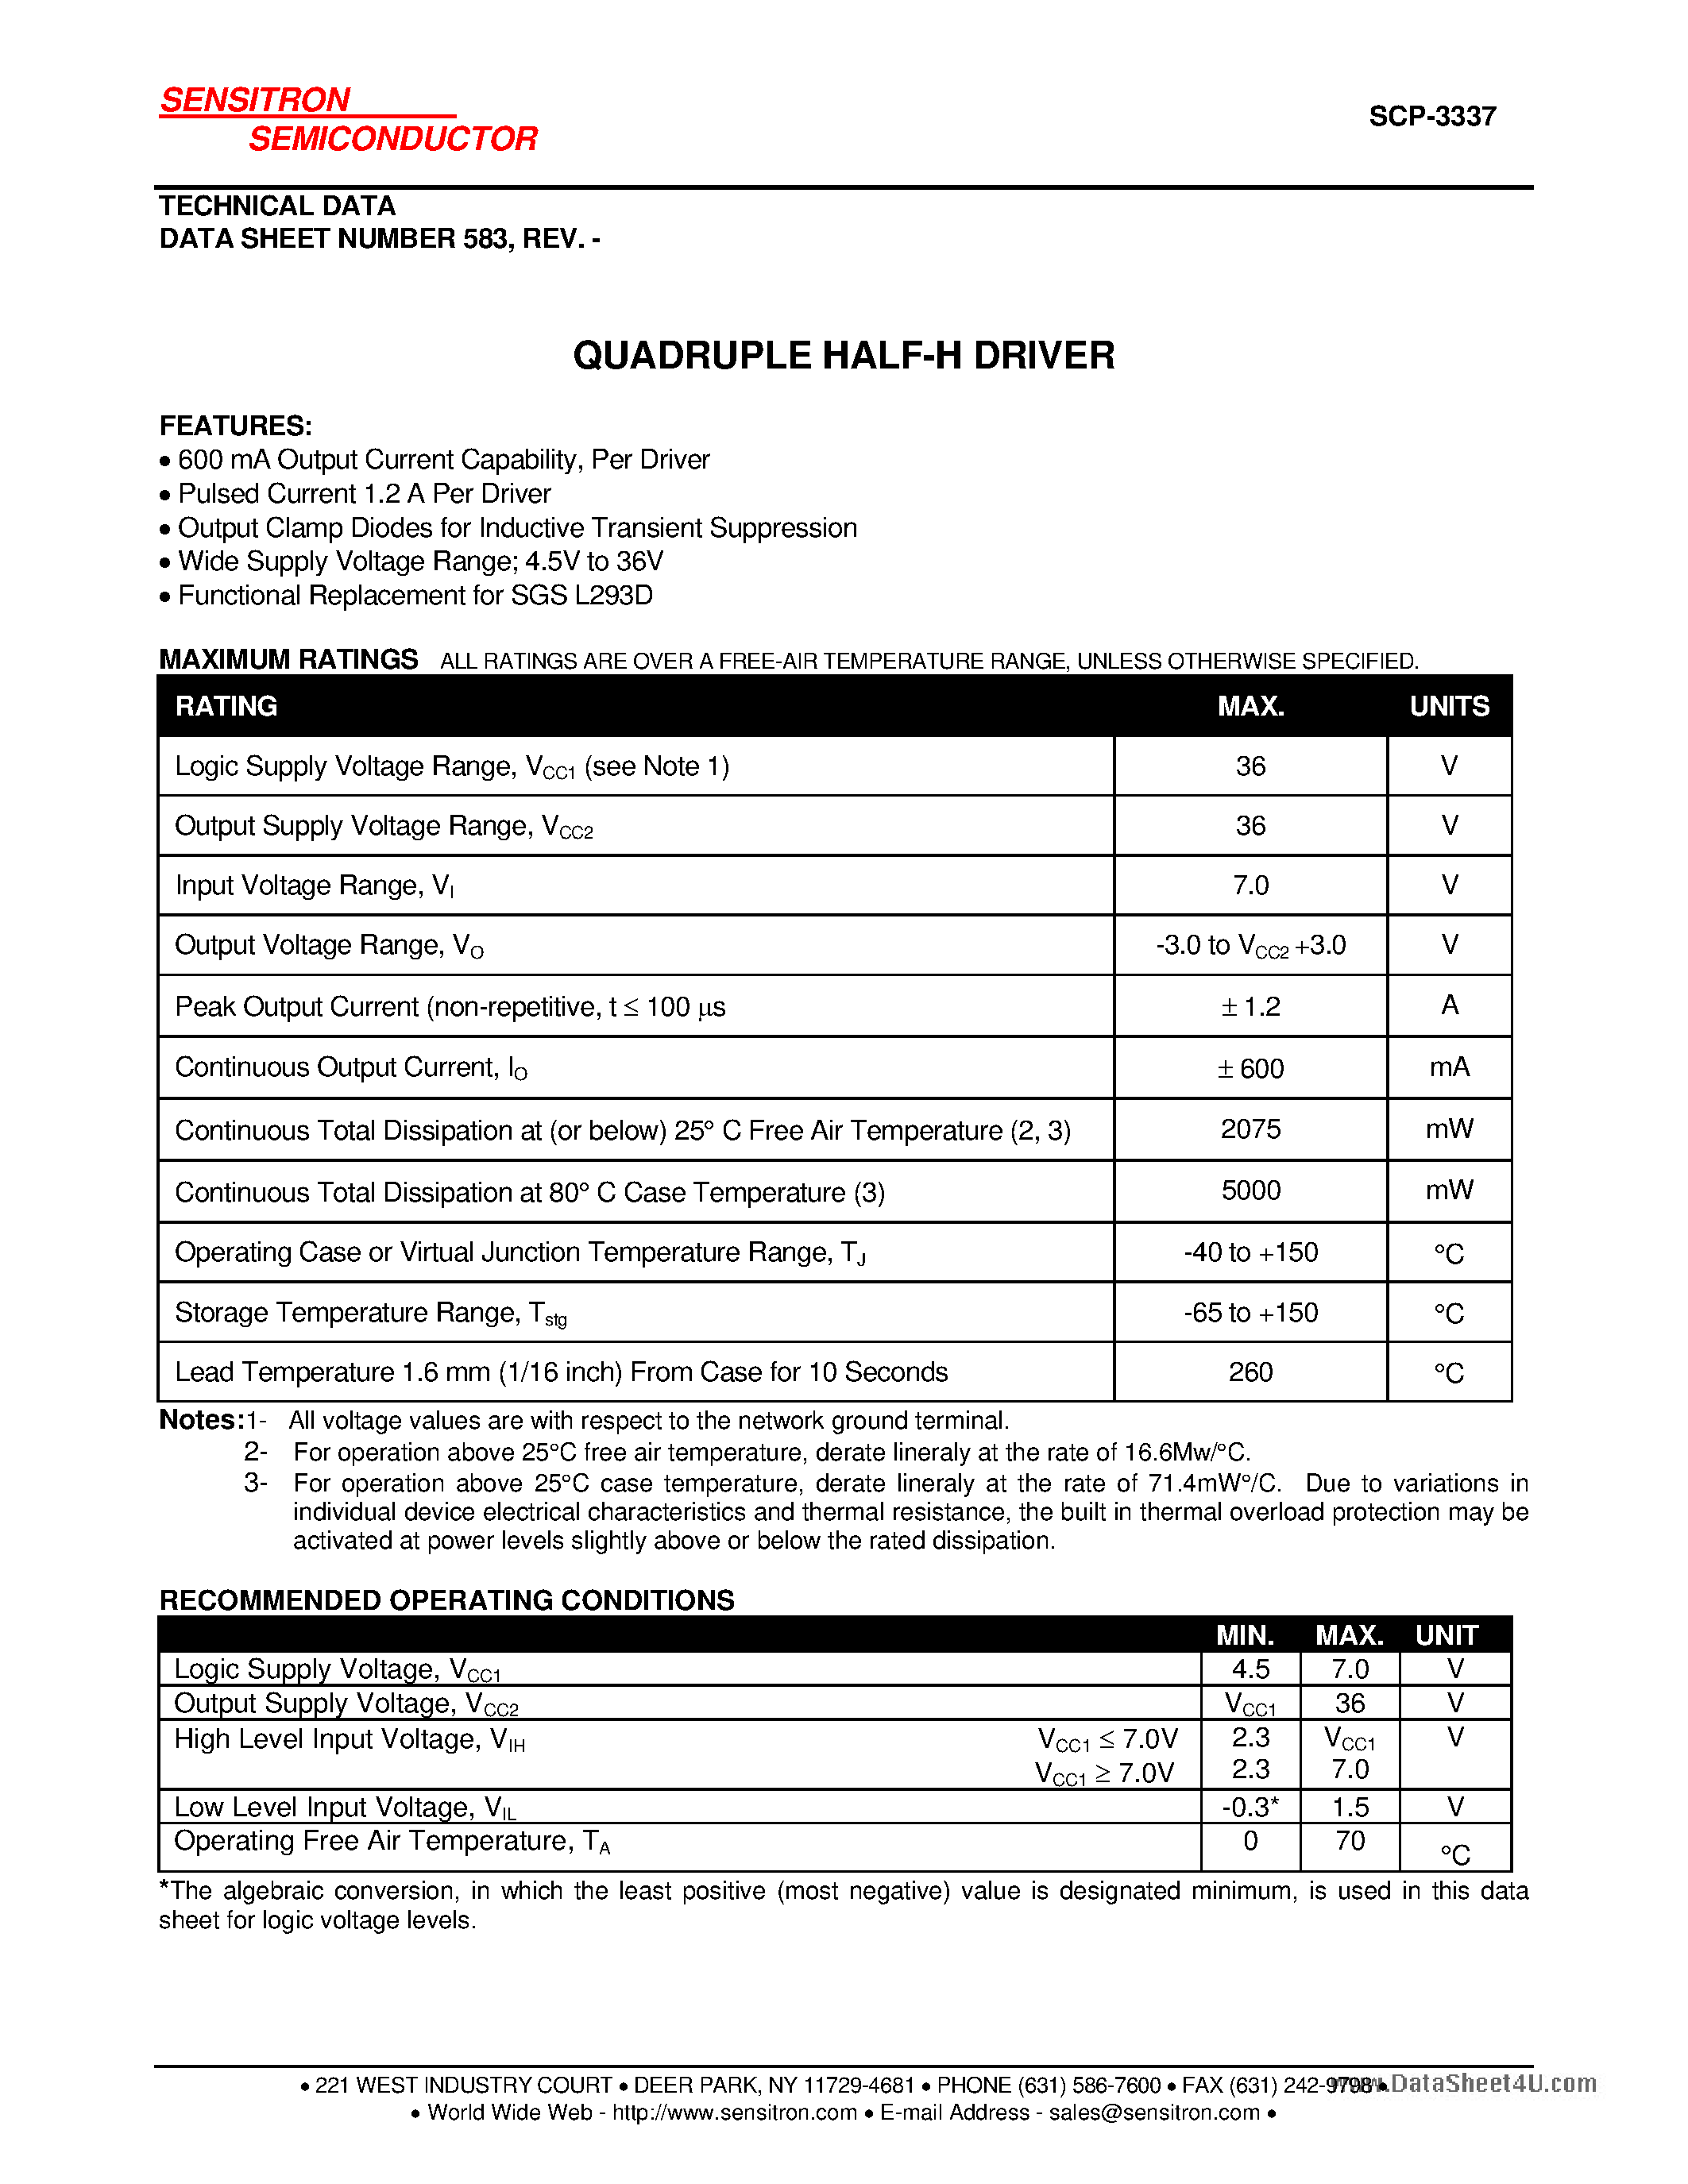 Datasheet SCP-3337 - QUADRUPLE HALF-H DRIVER page 1